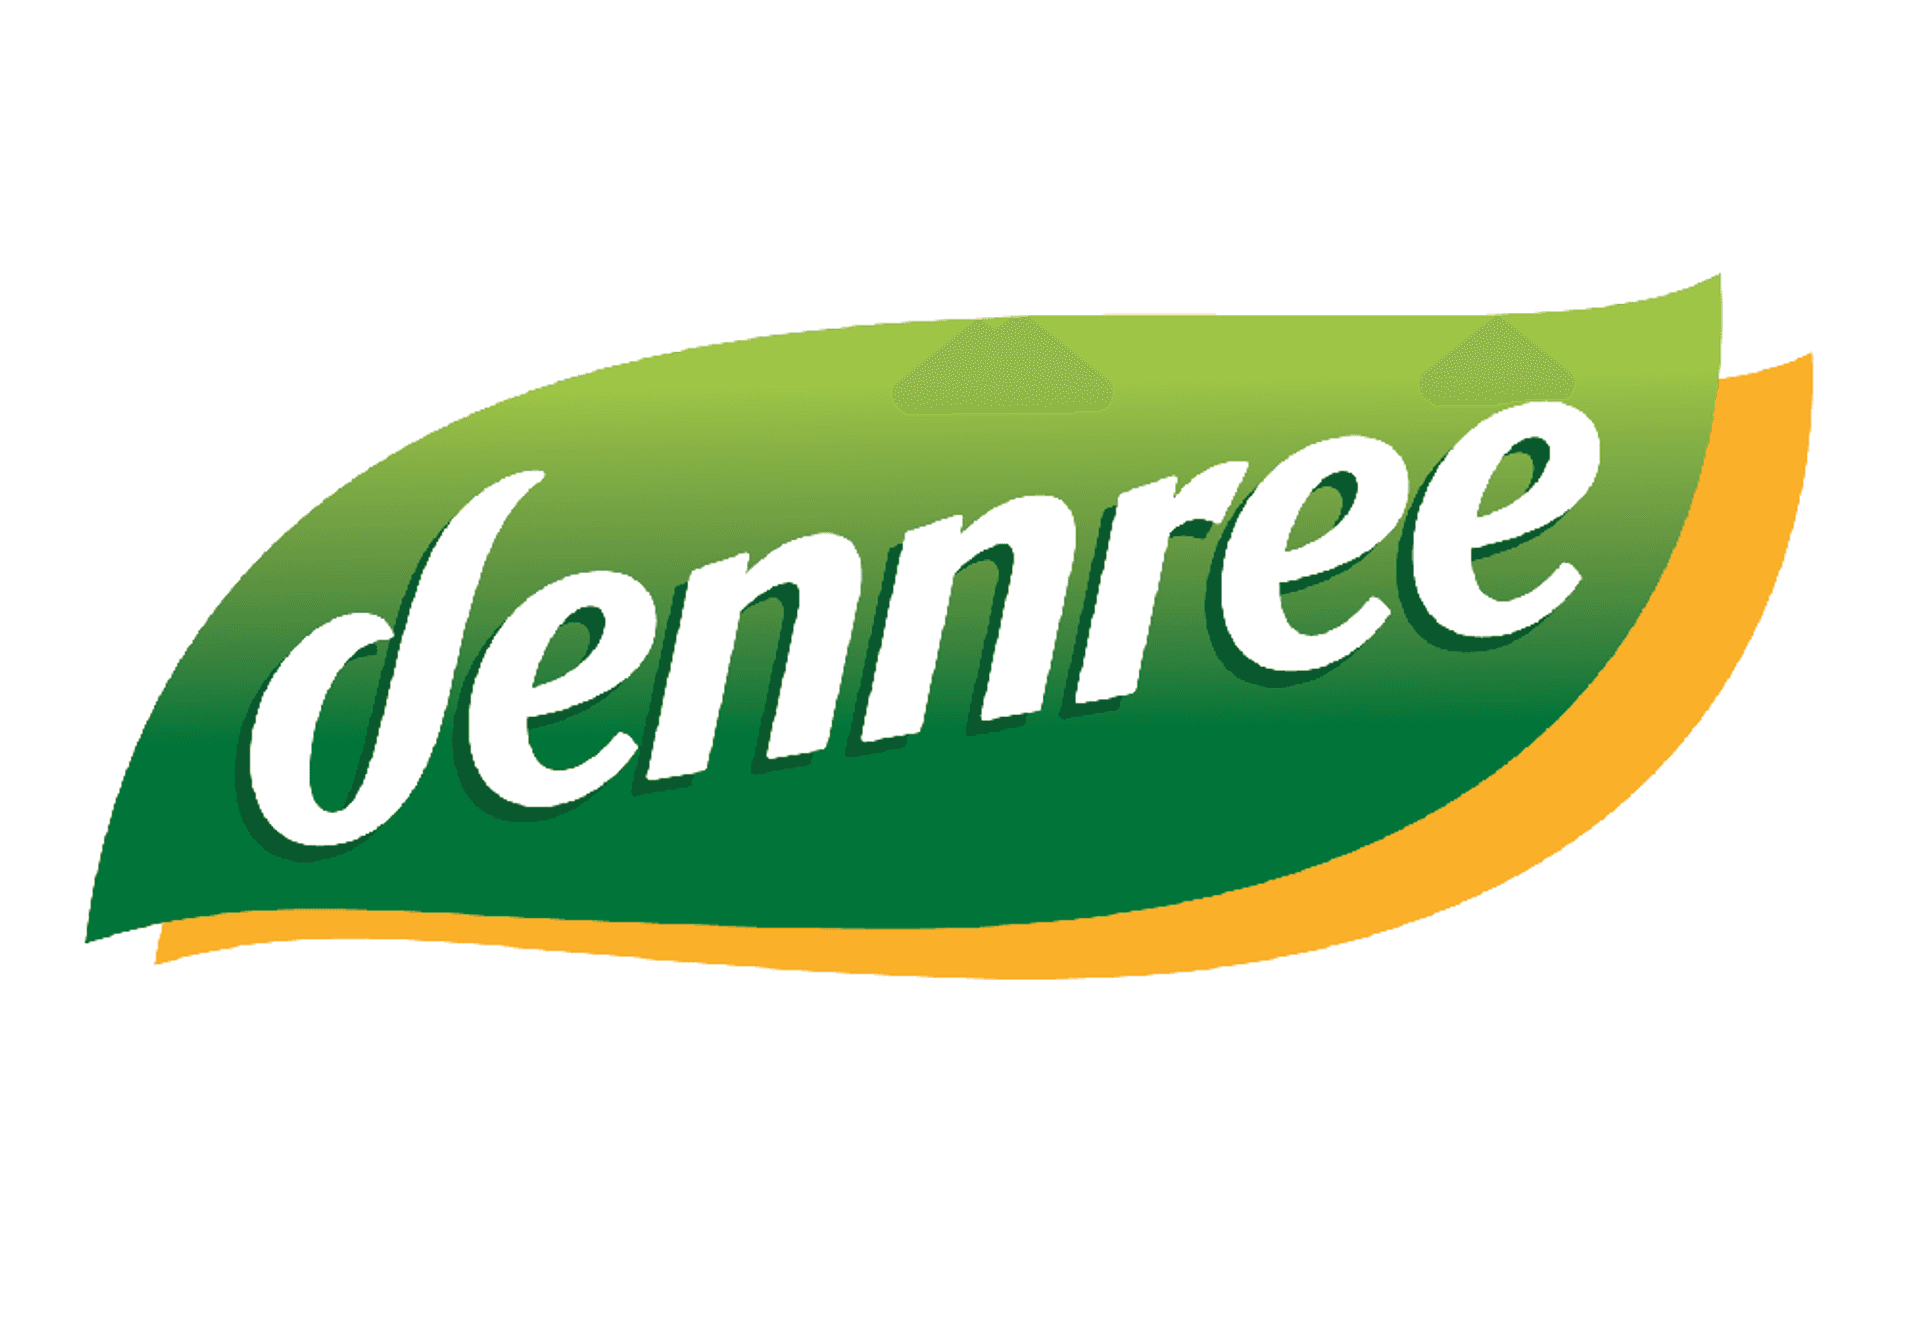 Dennree logo